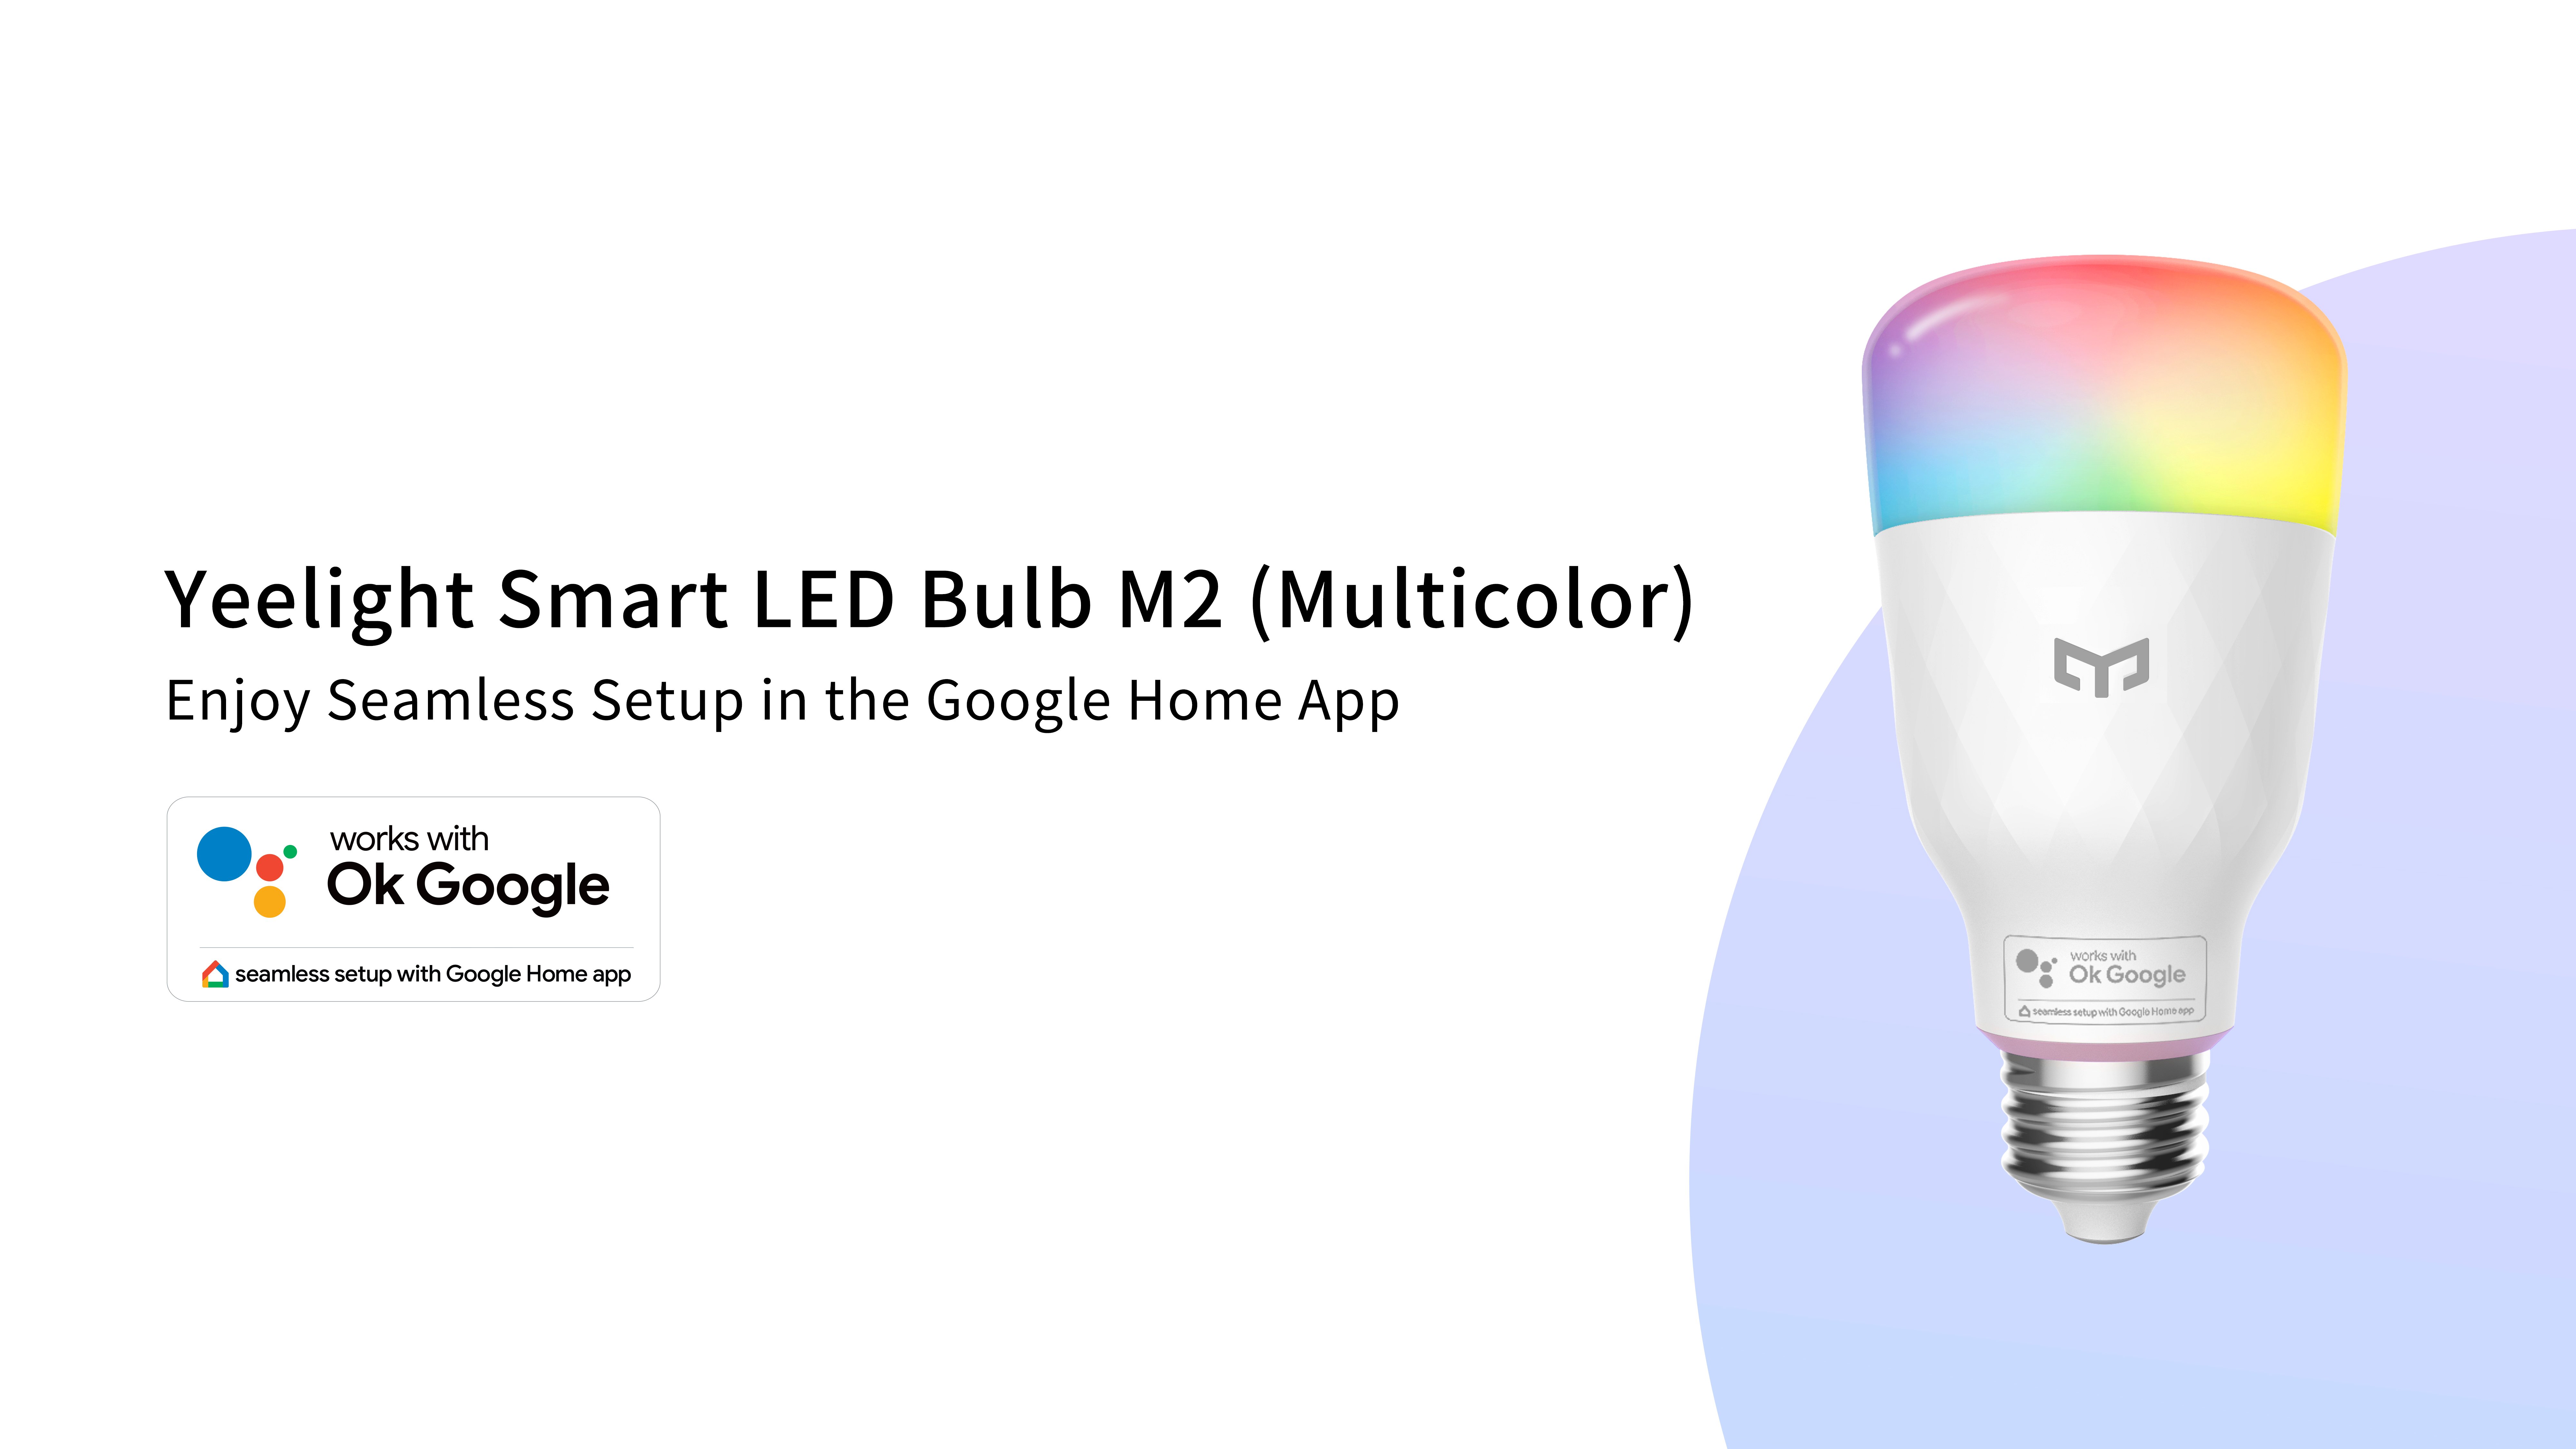 arbejdsløshed Statistikker retning Yeelight Debuts Smart LED Bulb M2 that supports Google Seamless Setup -  Gizmochina